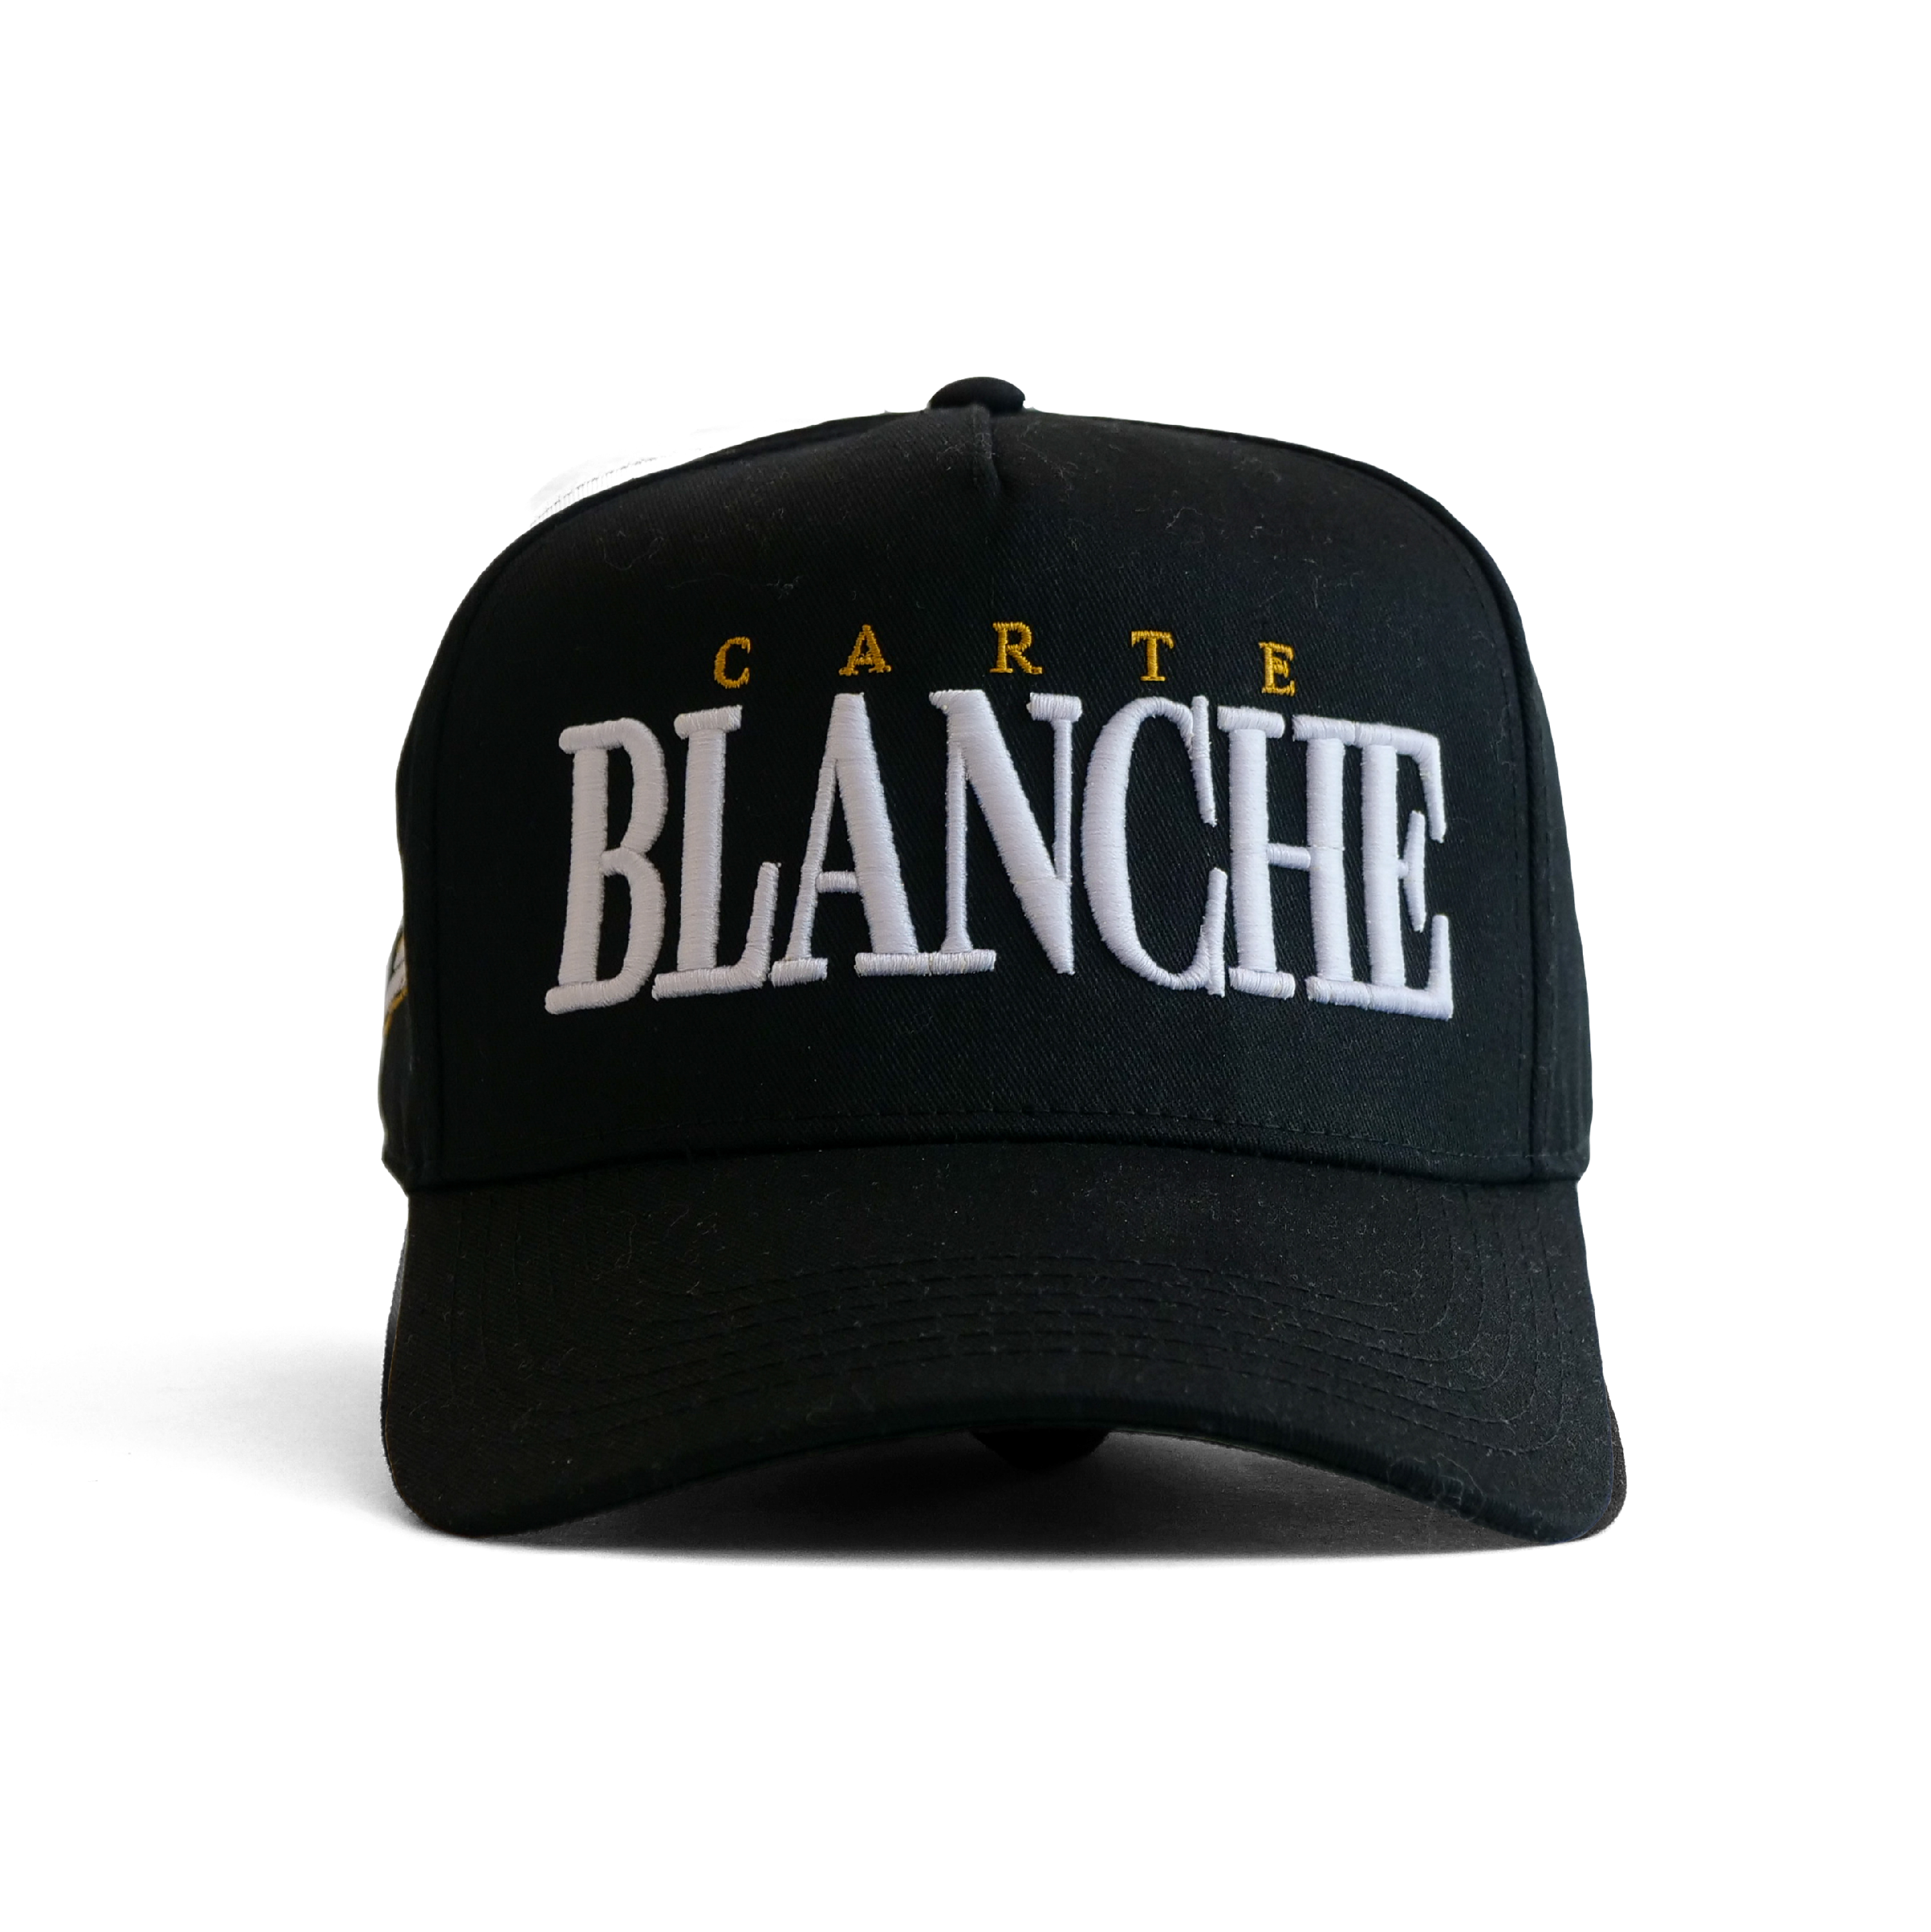 The 007 Blanche Snapback // Black